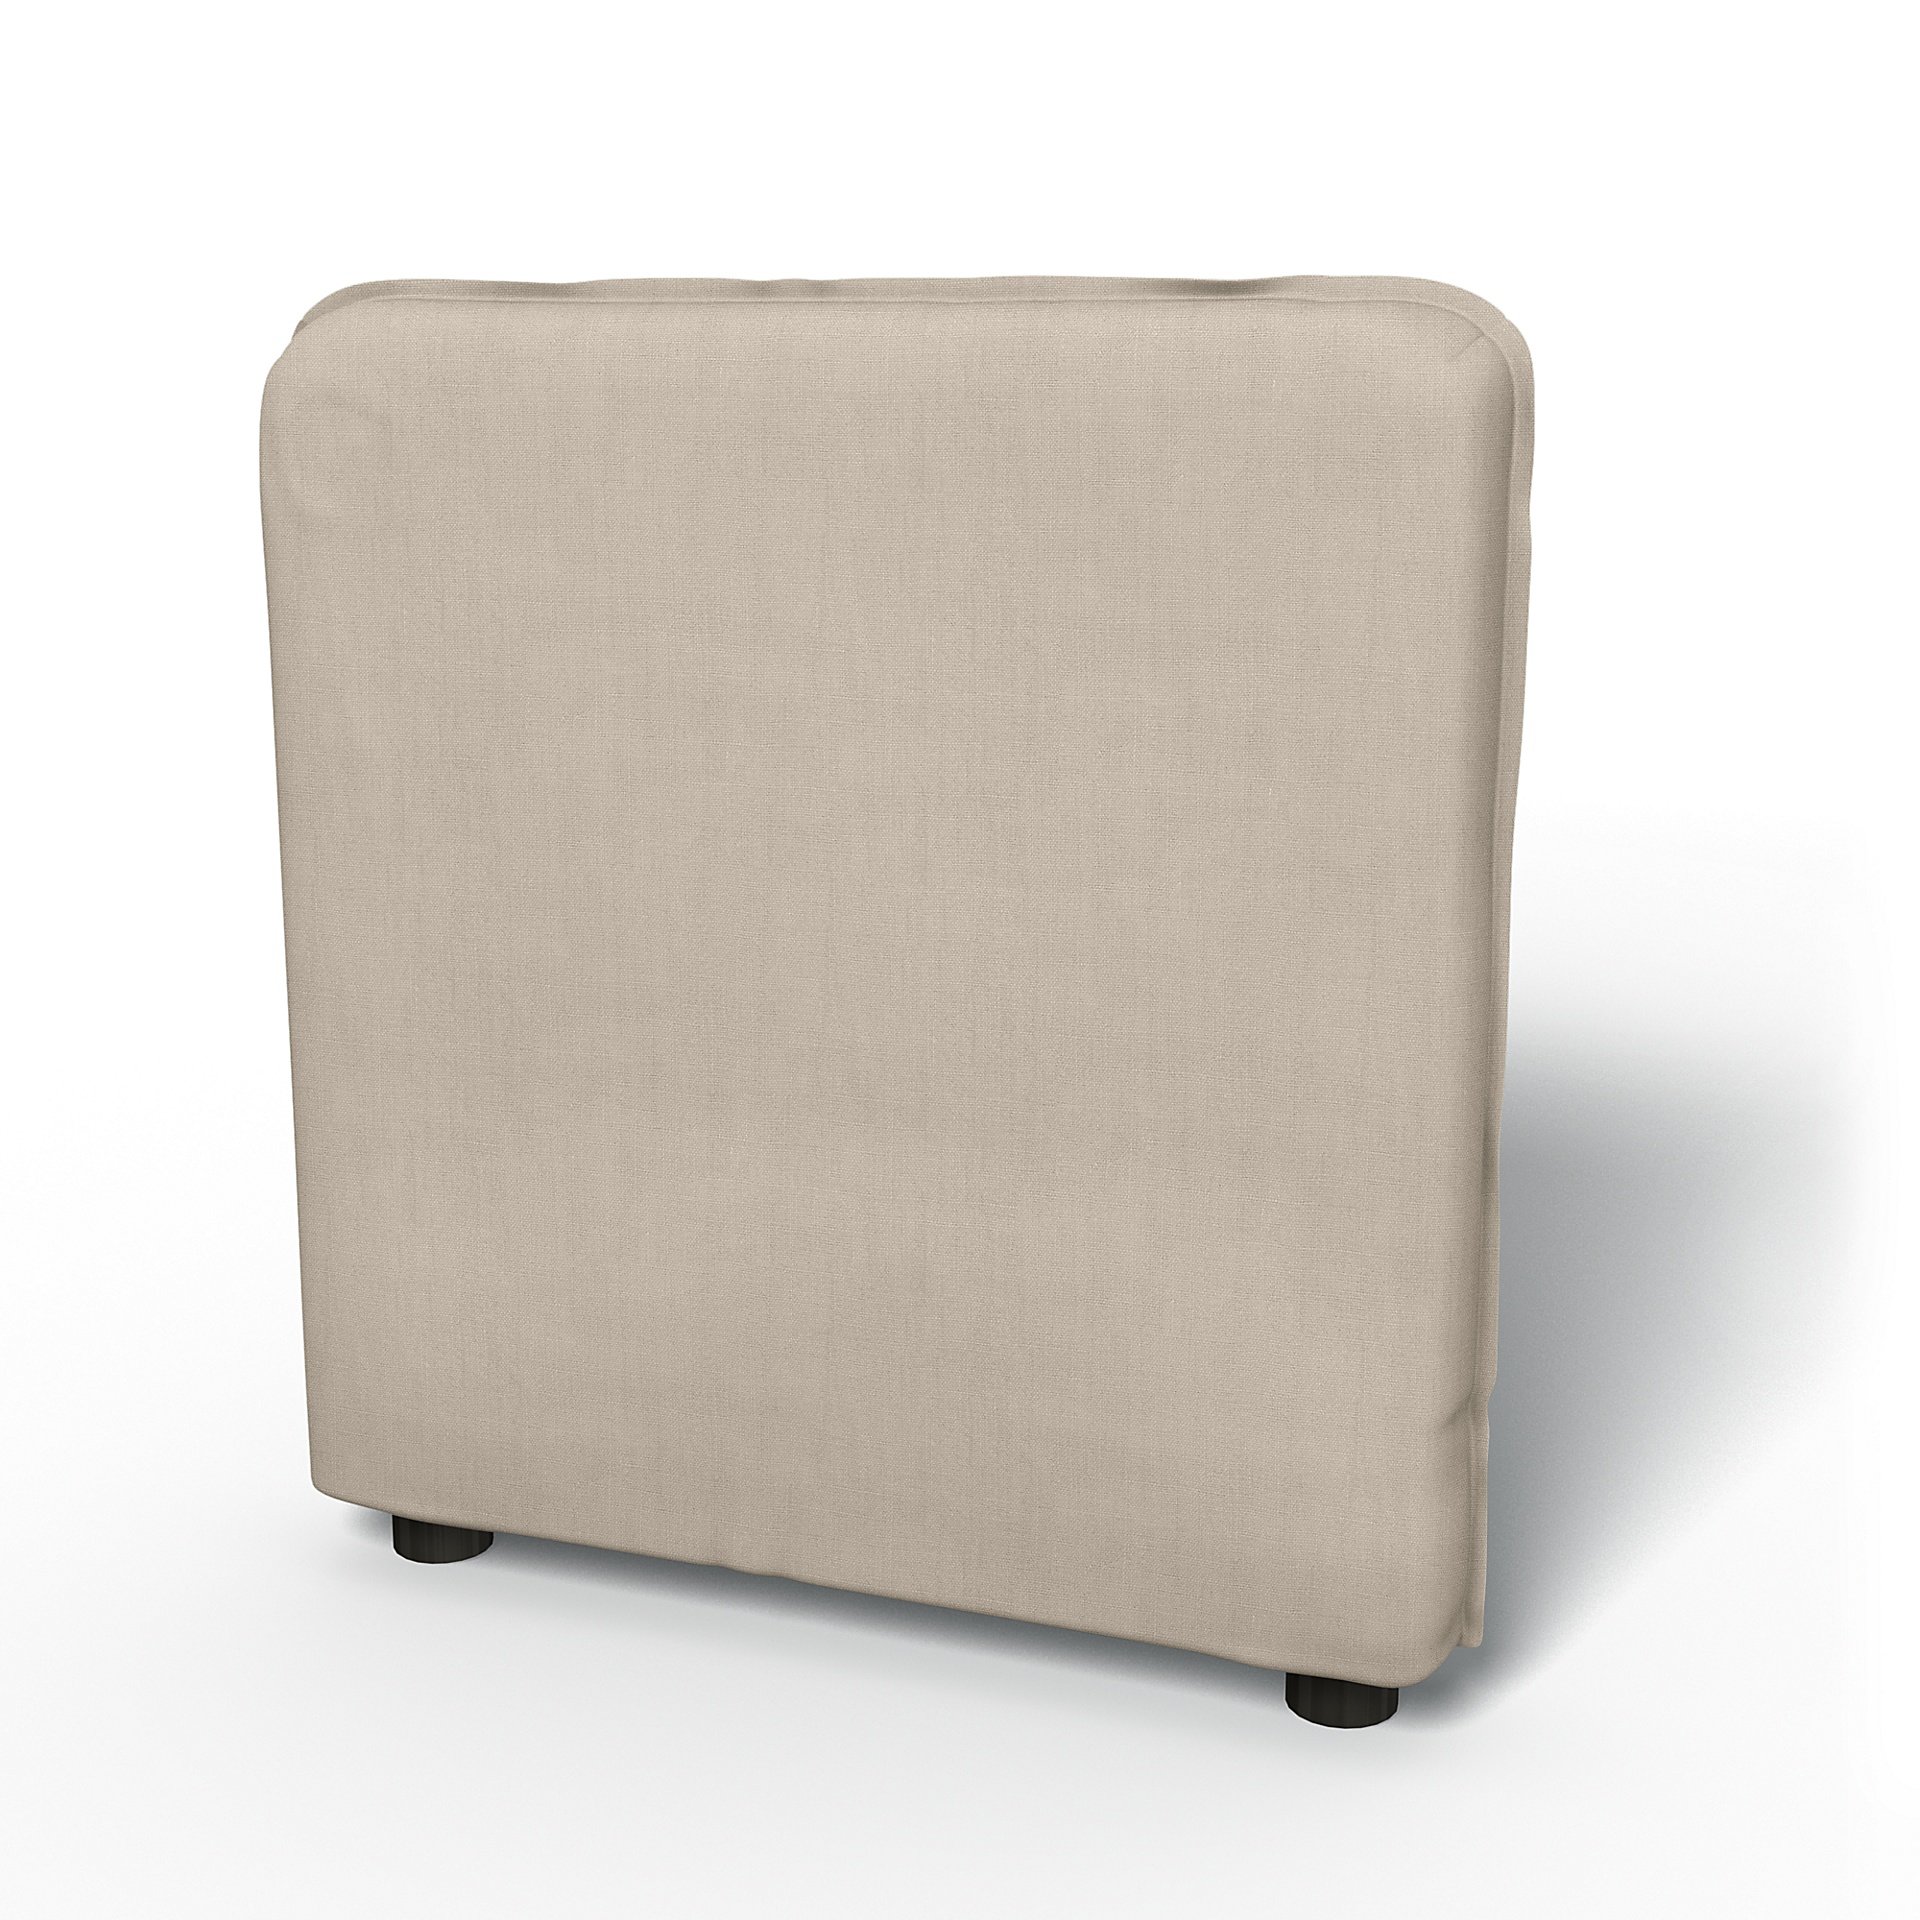 IKEA - Vallentuna Armrest Cover (80x60x13cm), Parchment, Linen - Bemz